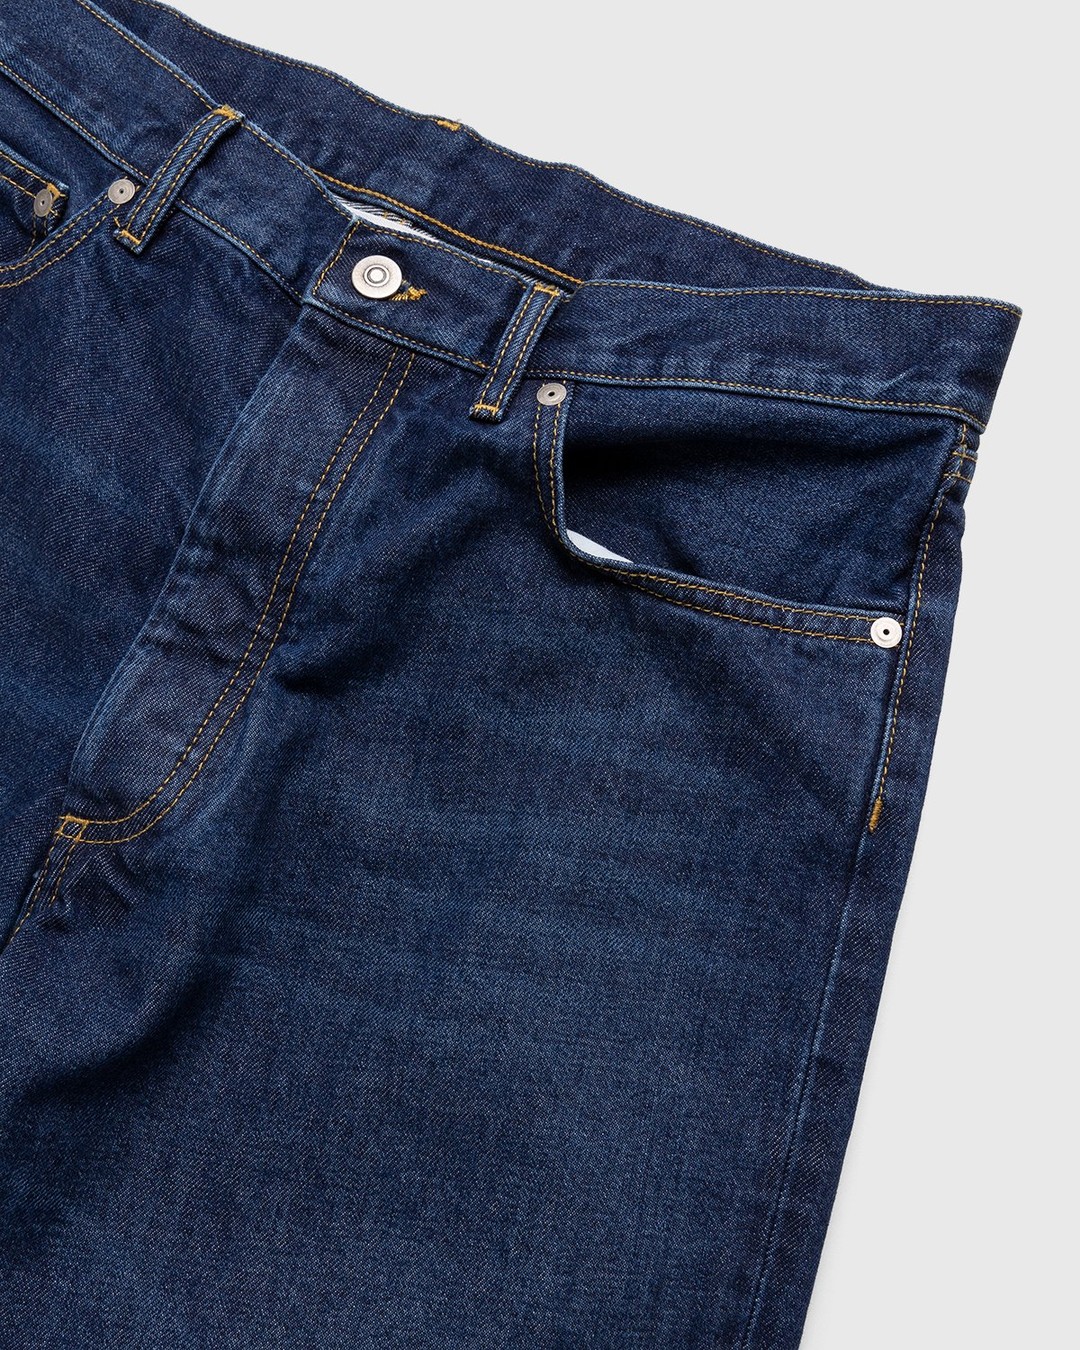 Maison Margiela – 5 Pocket Jeans Blue - Denim - Blue - Image 4